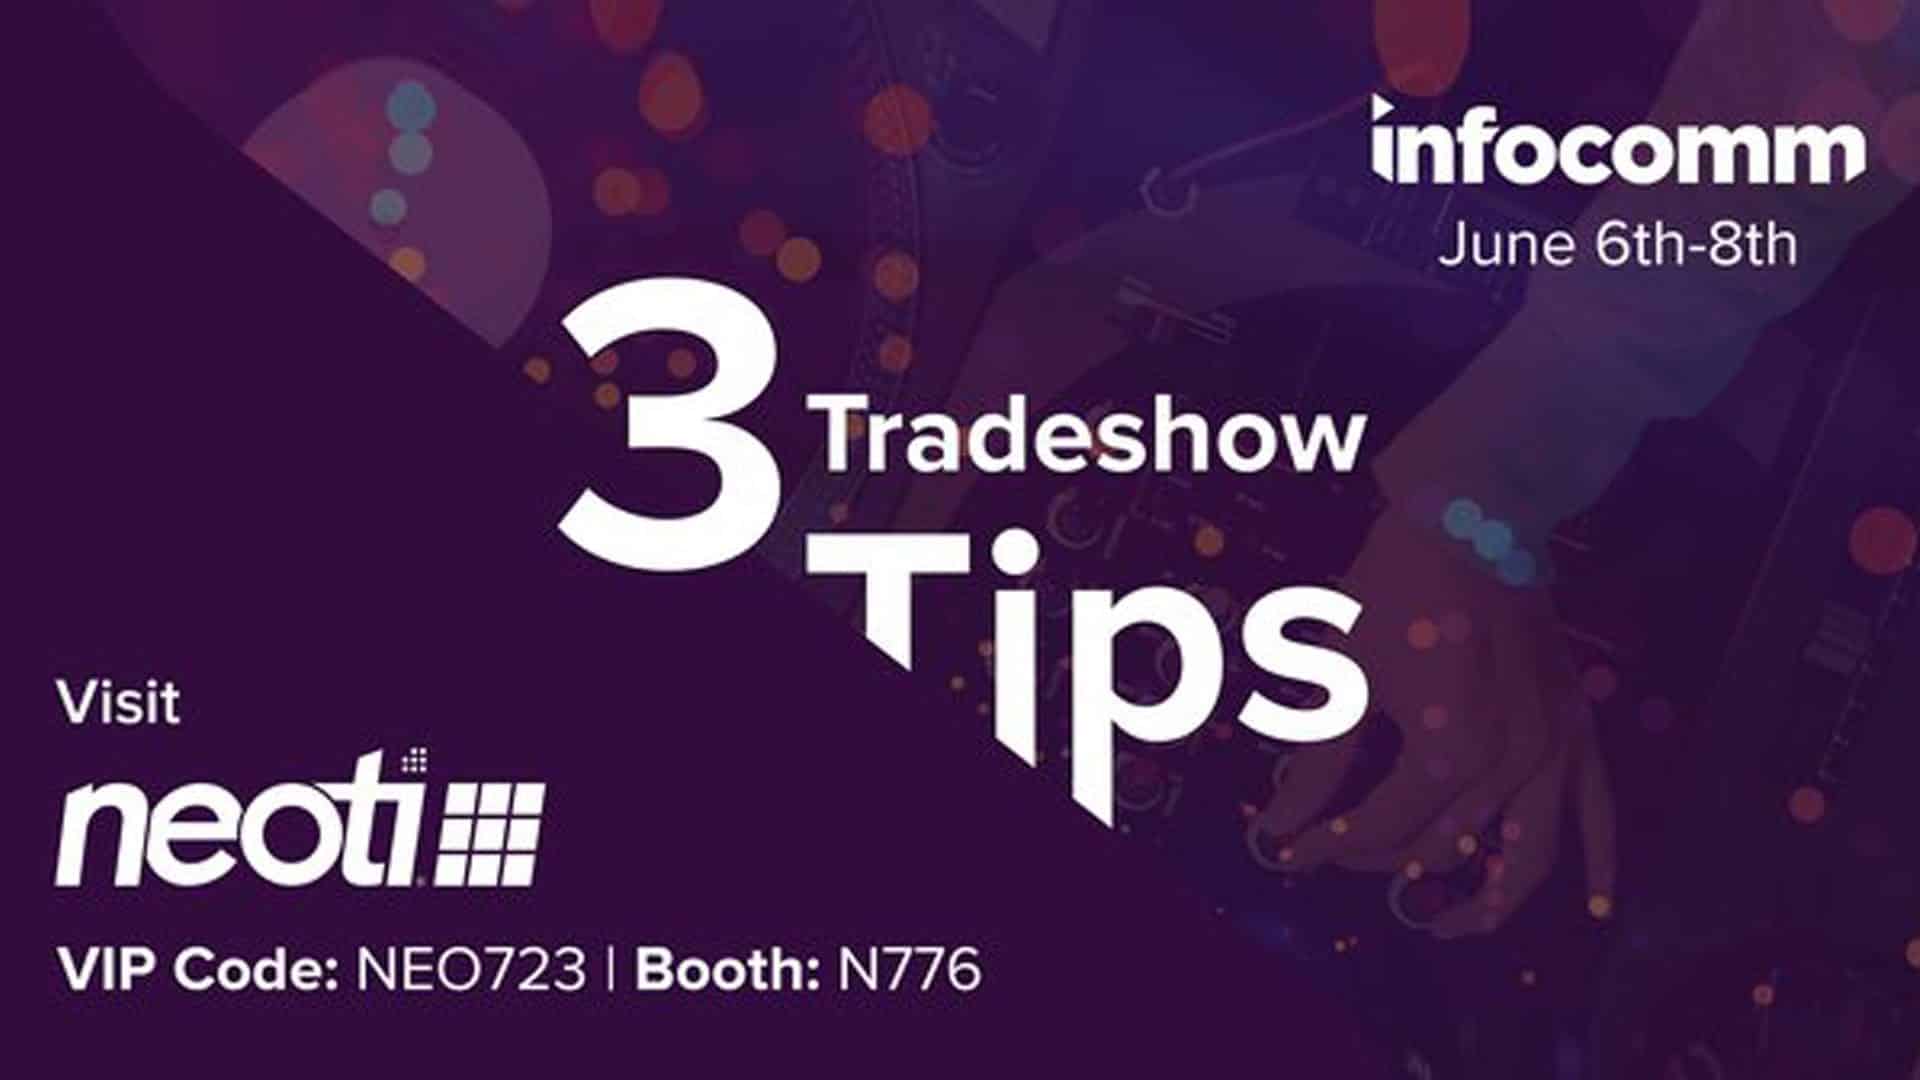 3 Tradeshow tips for Infocomm 2018